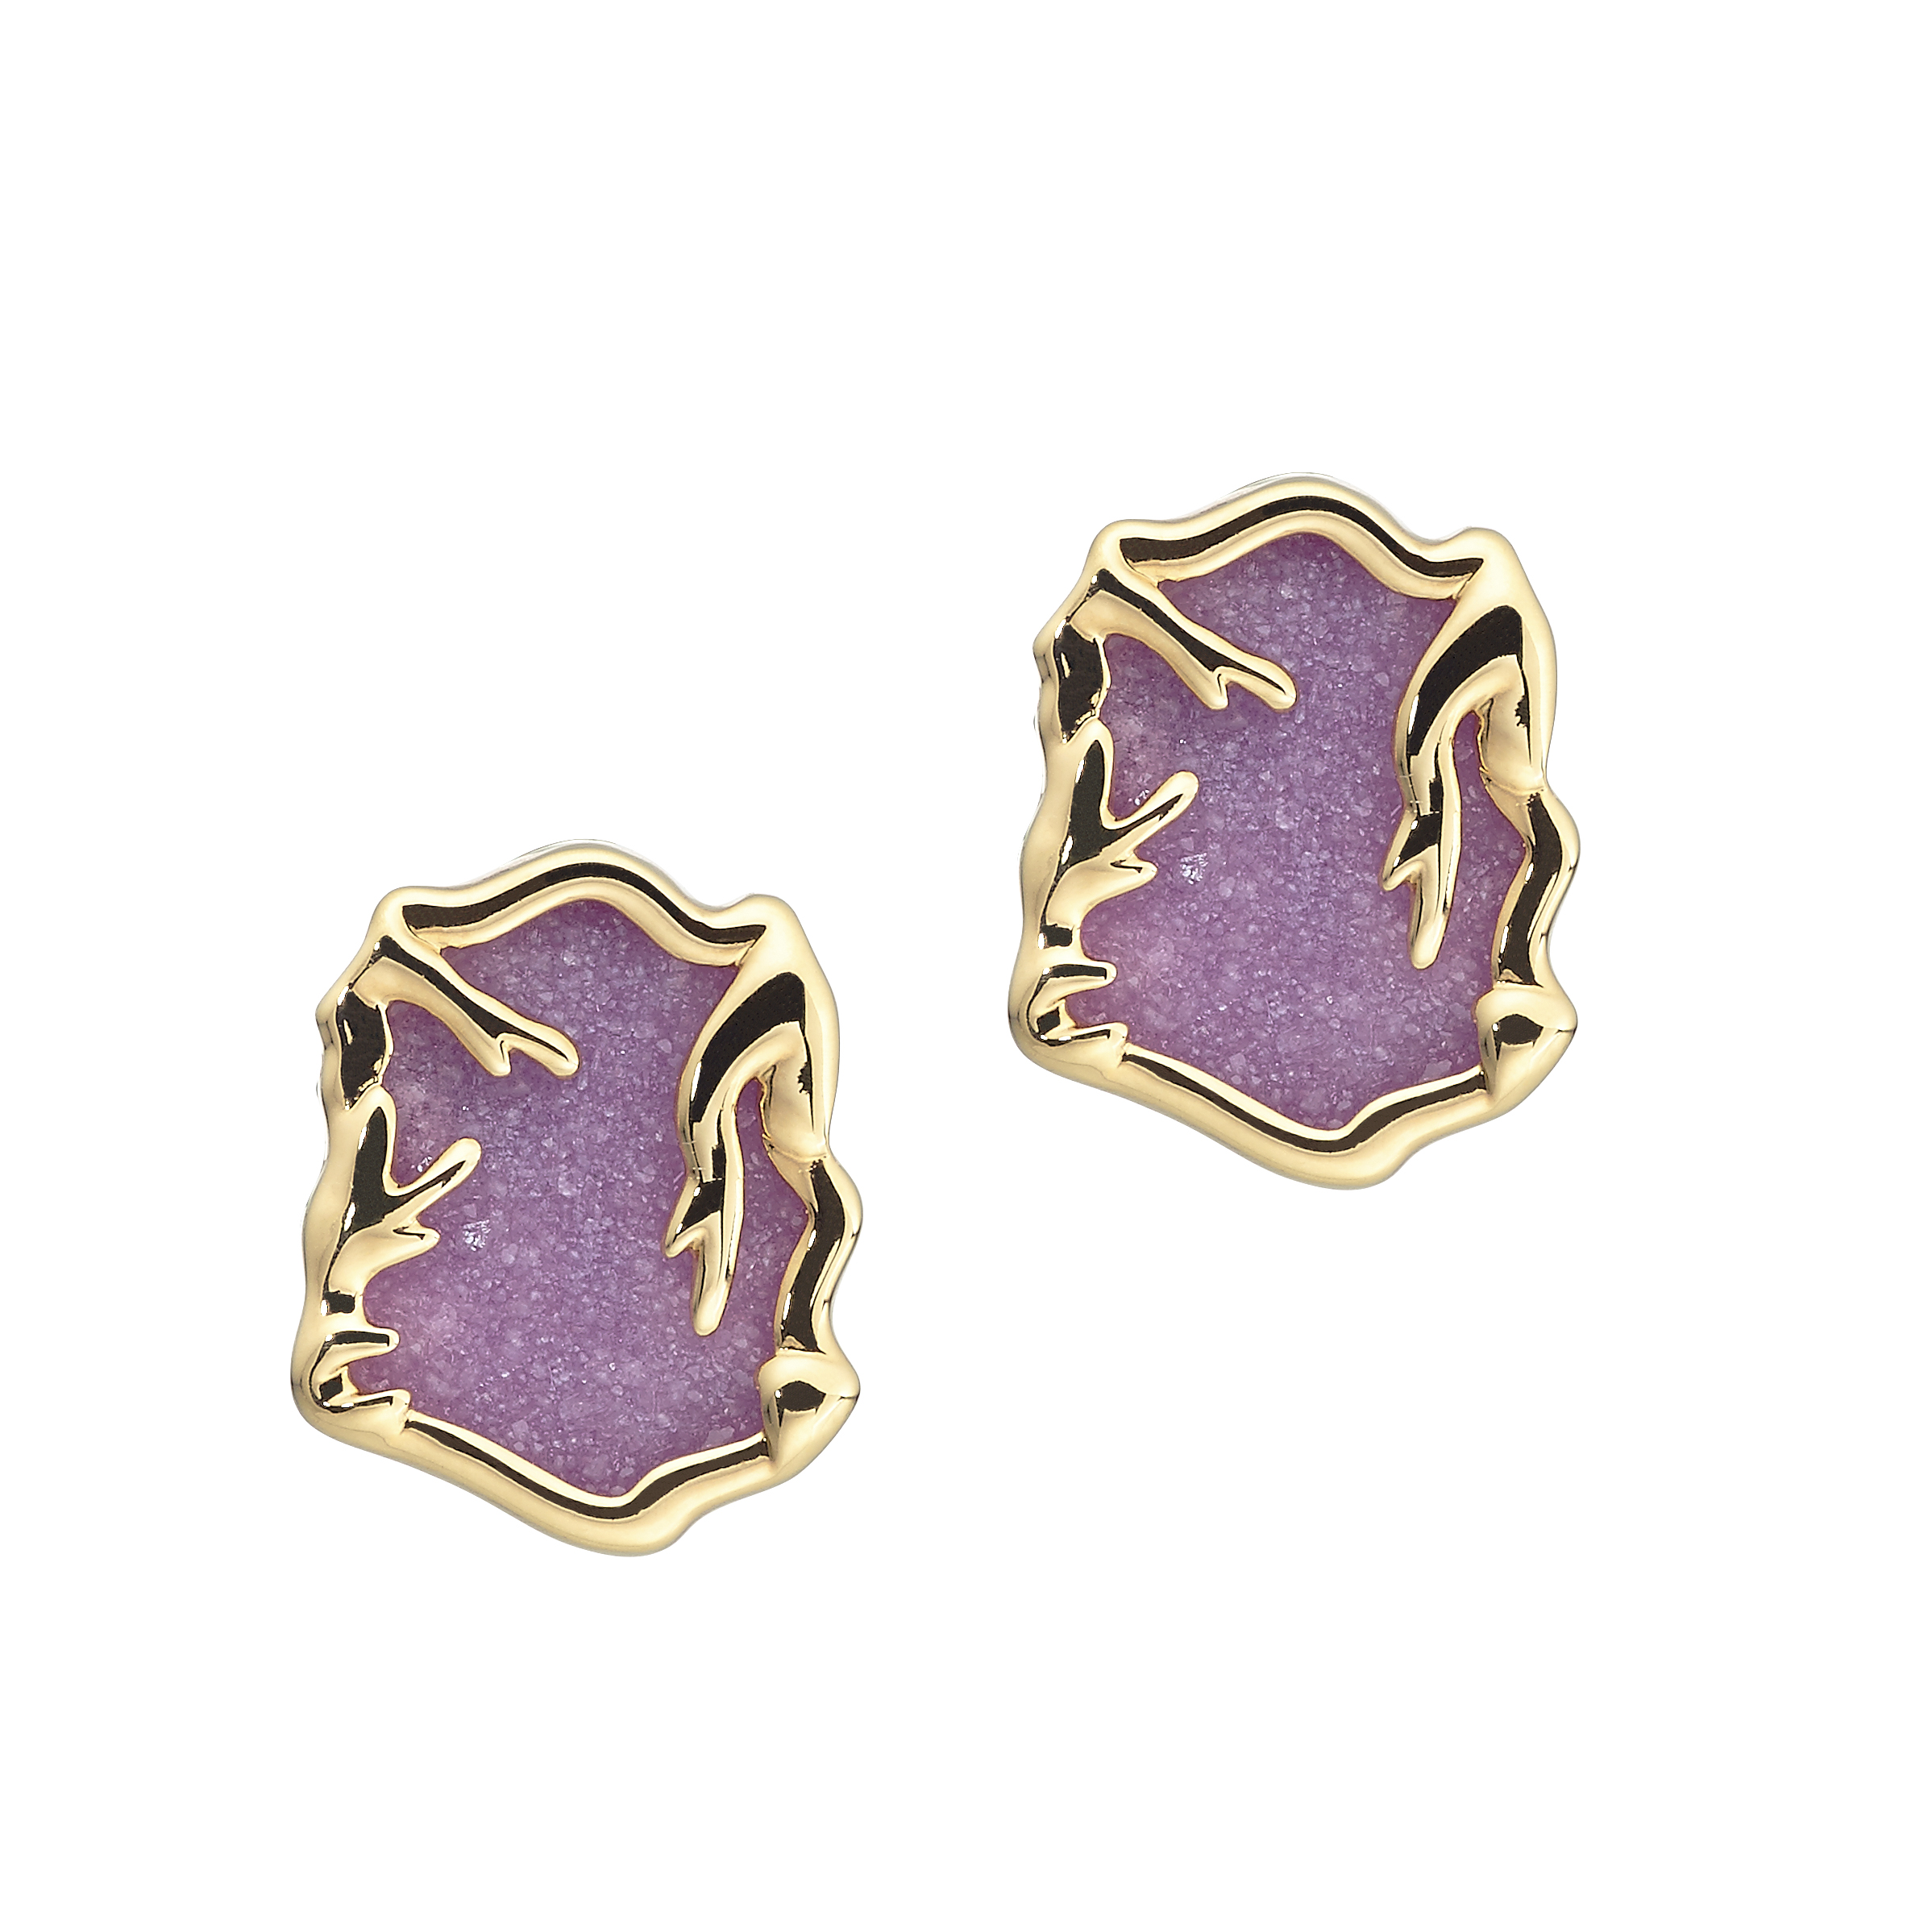 Copy of Ohrringe / Earrings in Gold and purple Achate Gemstones